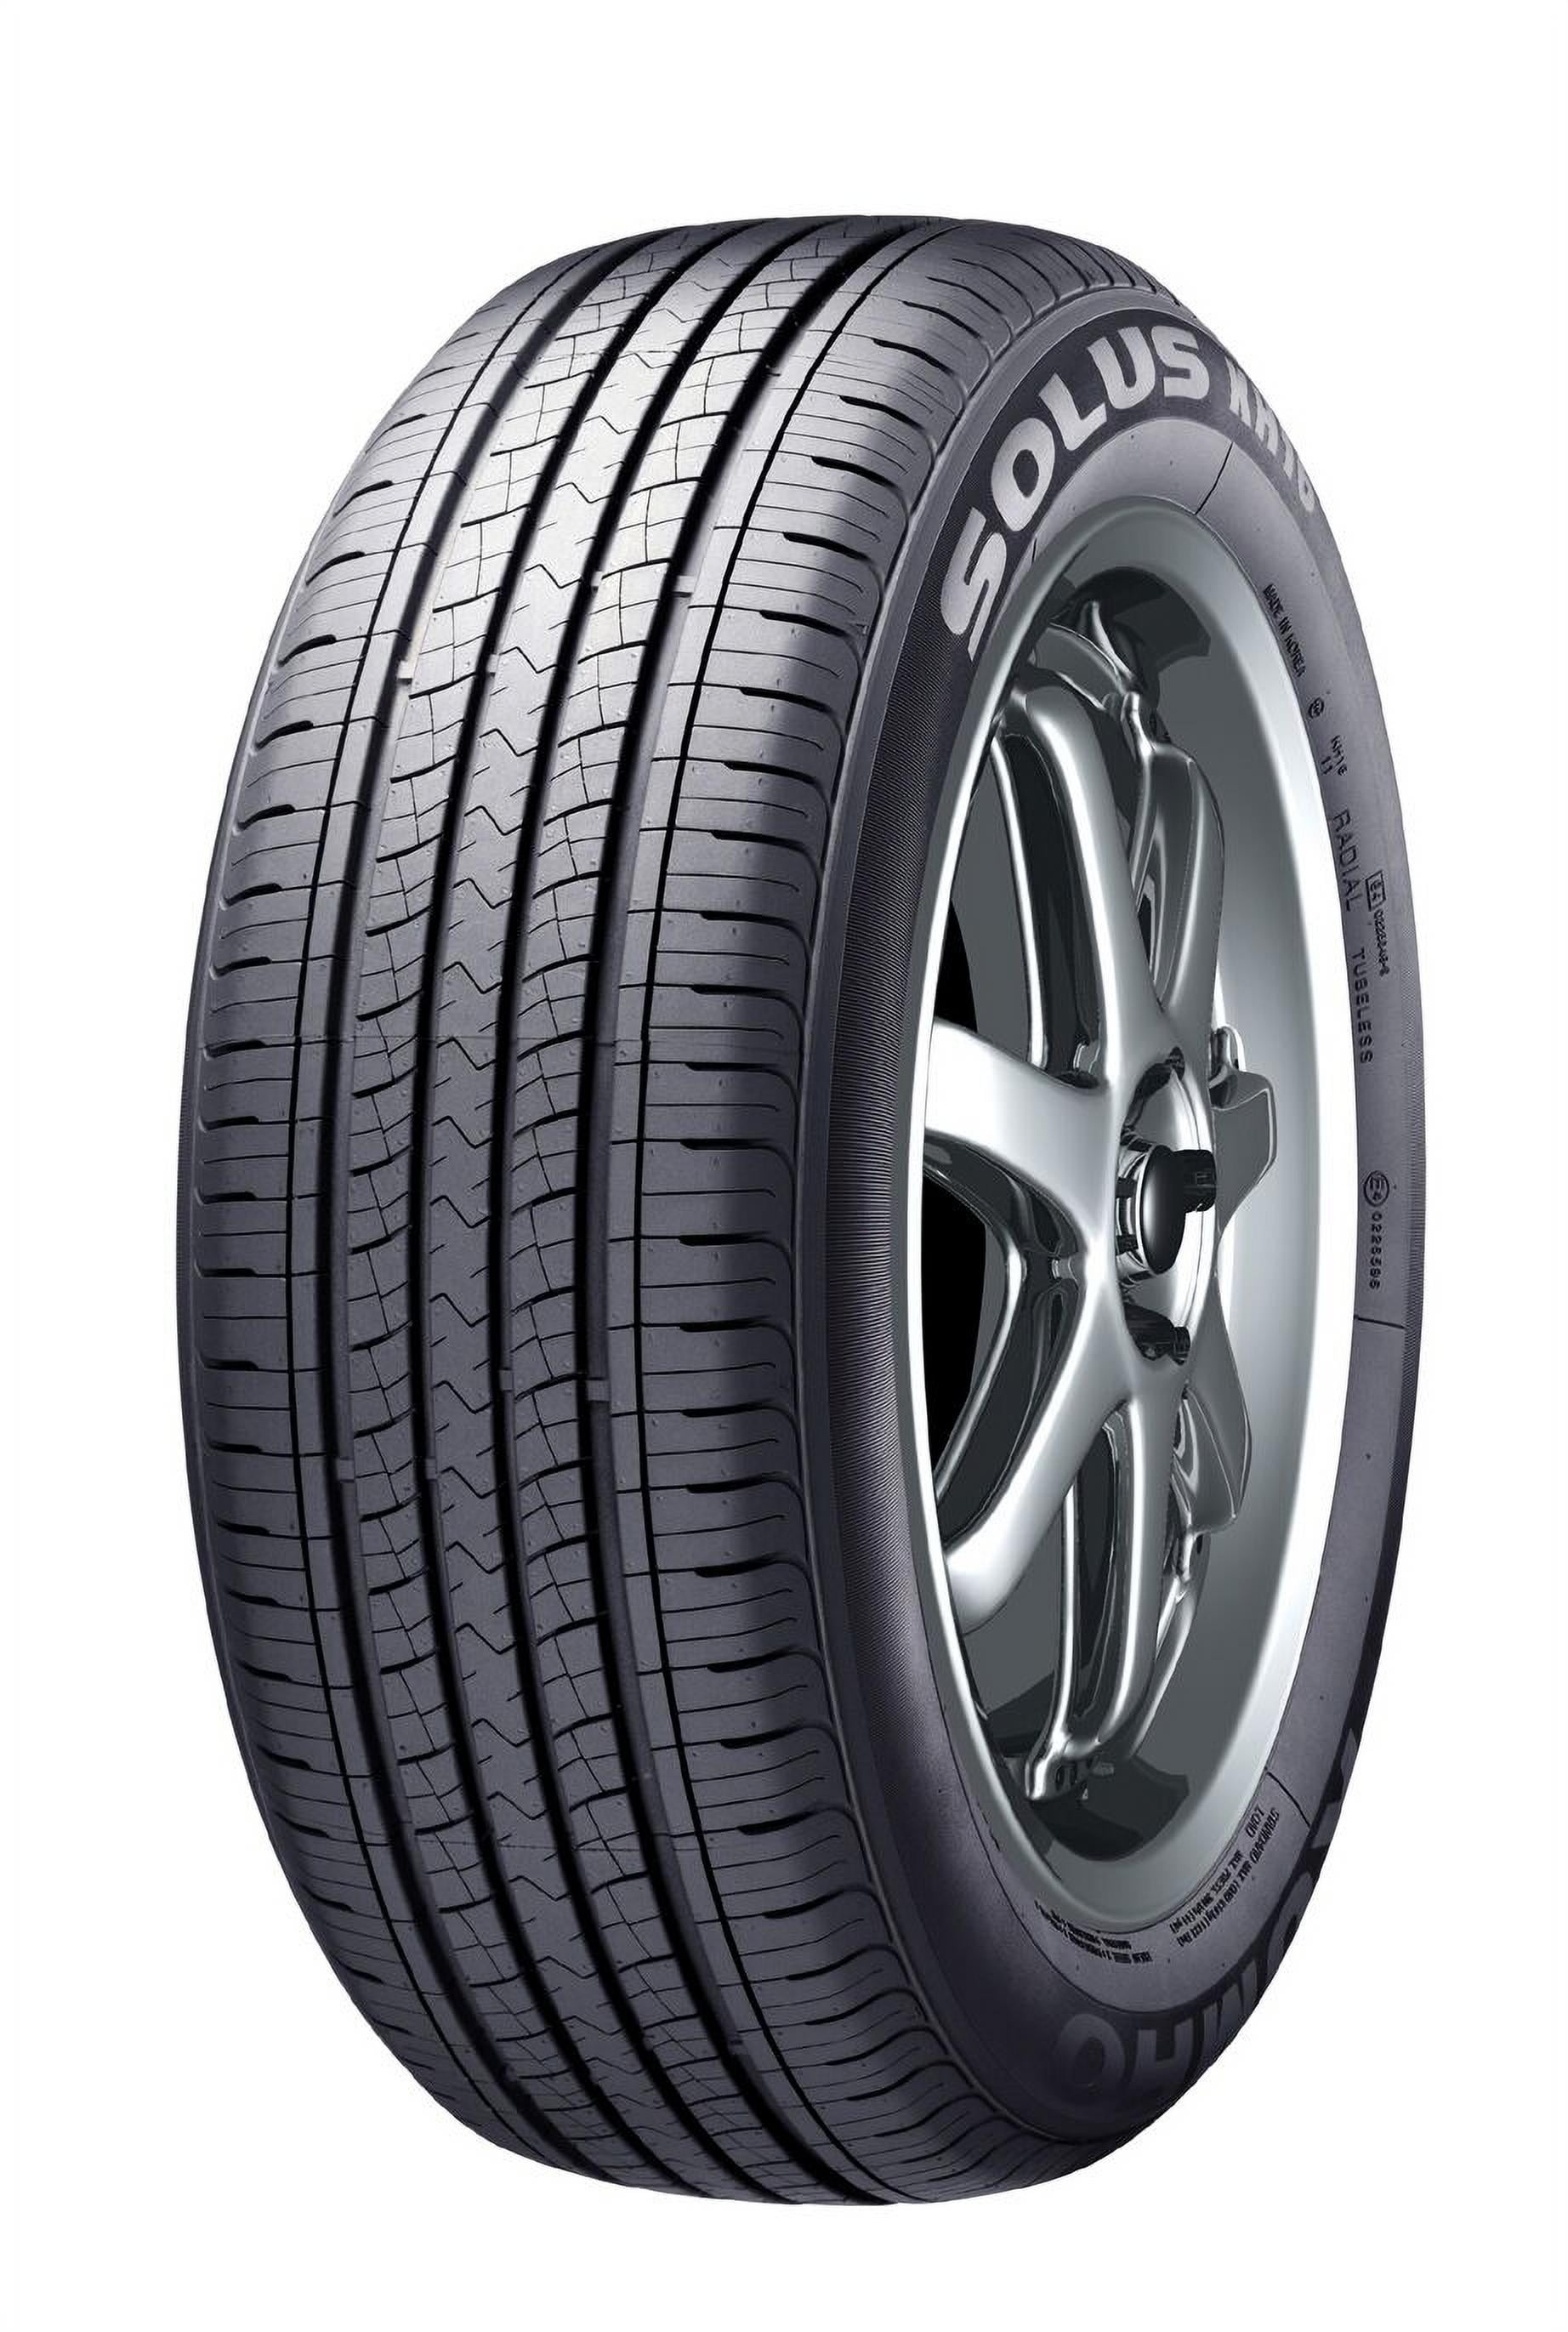 Kumho Solus KH16 All-Season Tire 255/60R17 - 106H